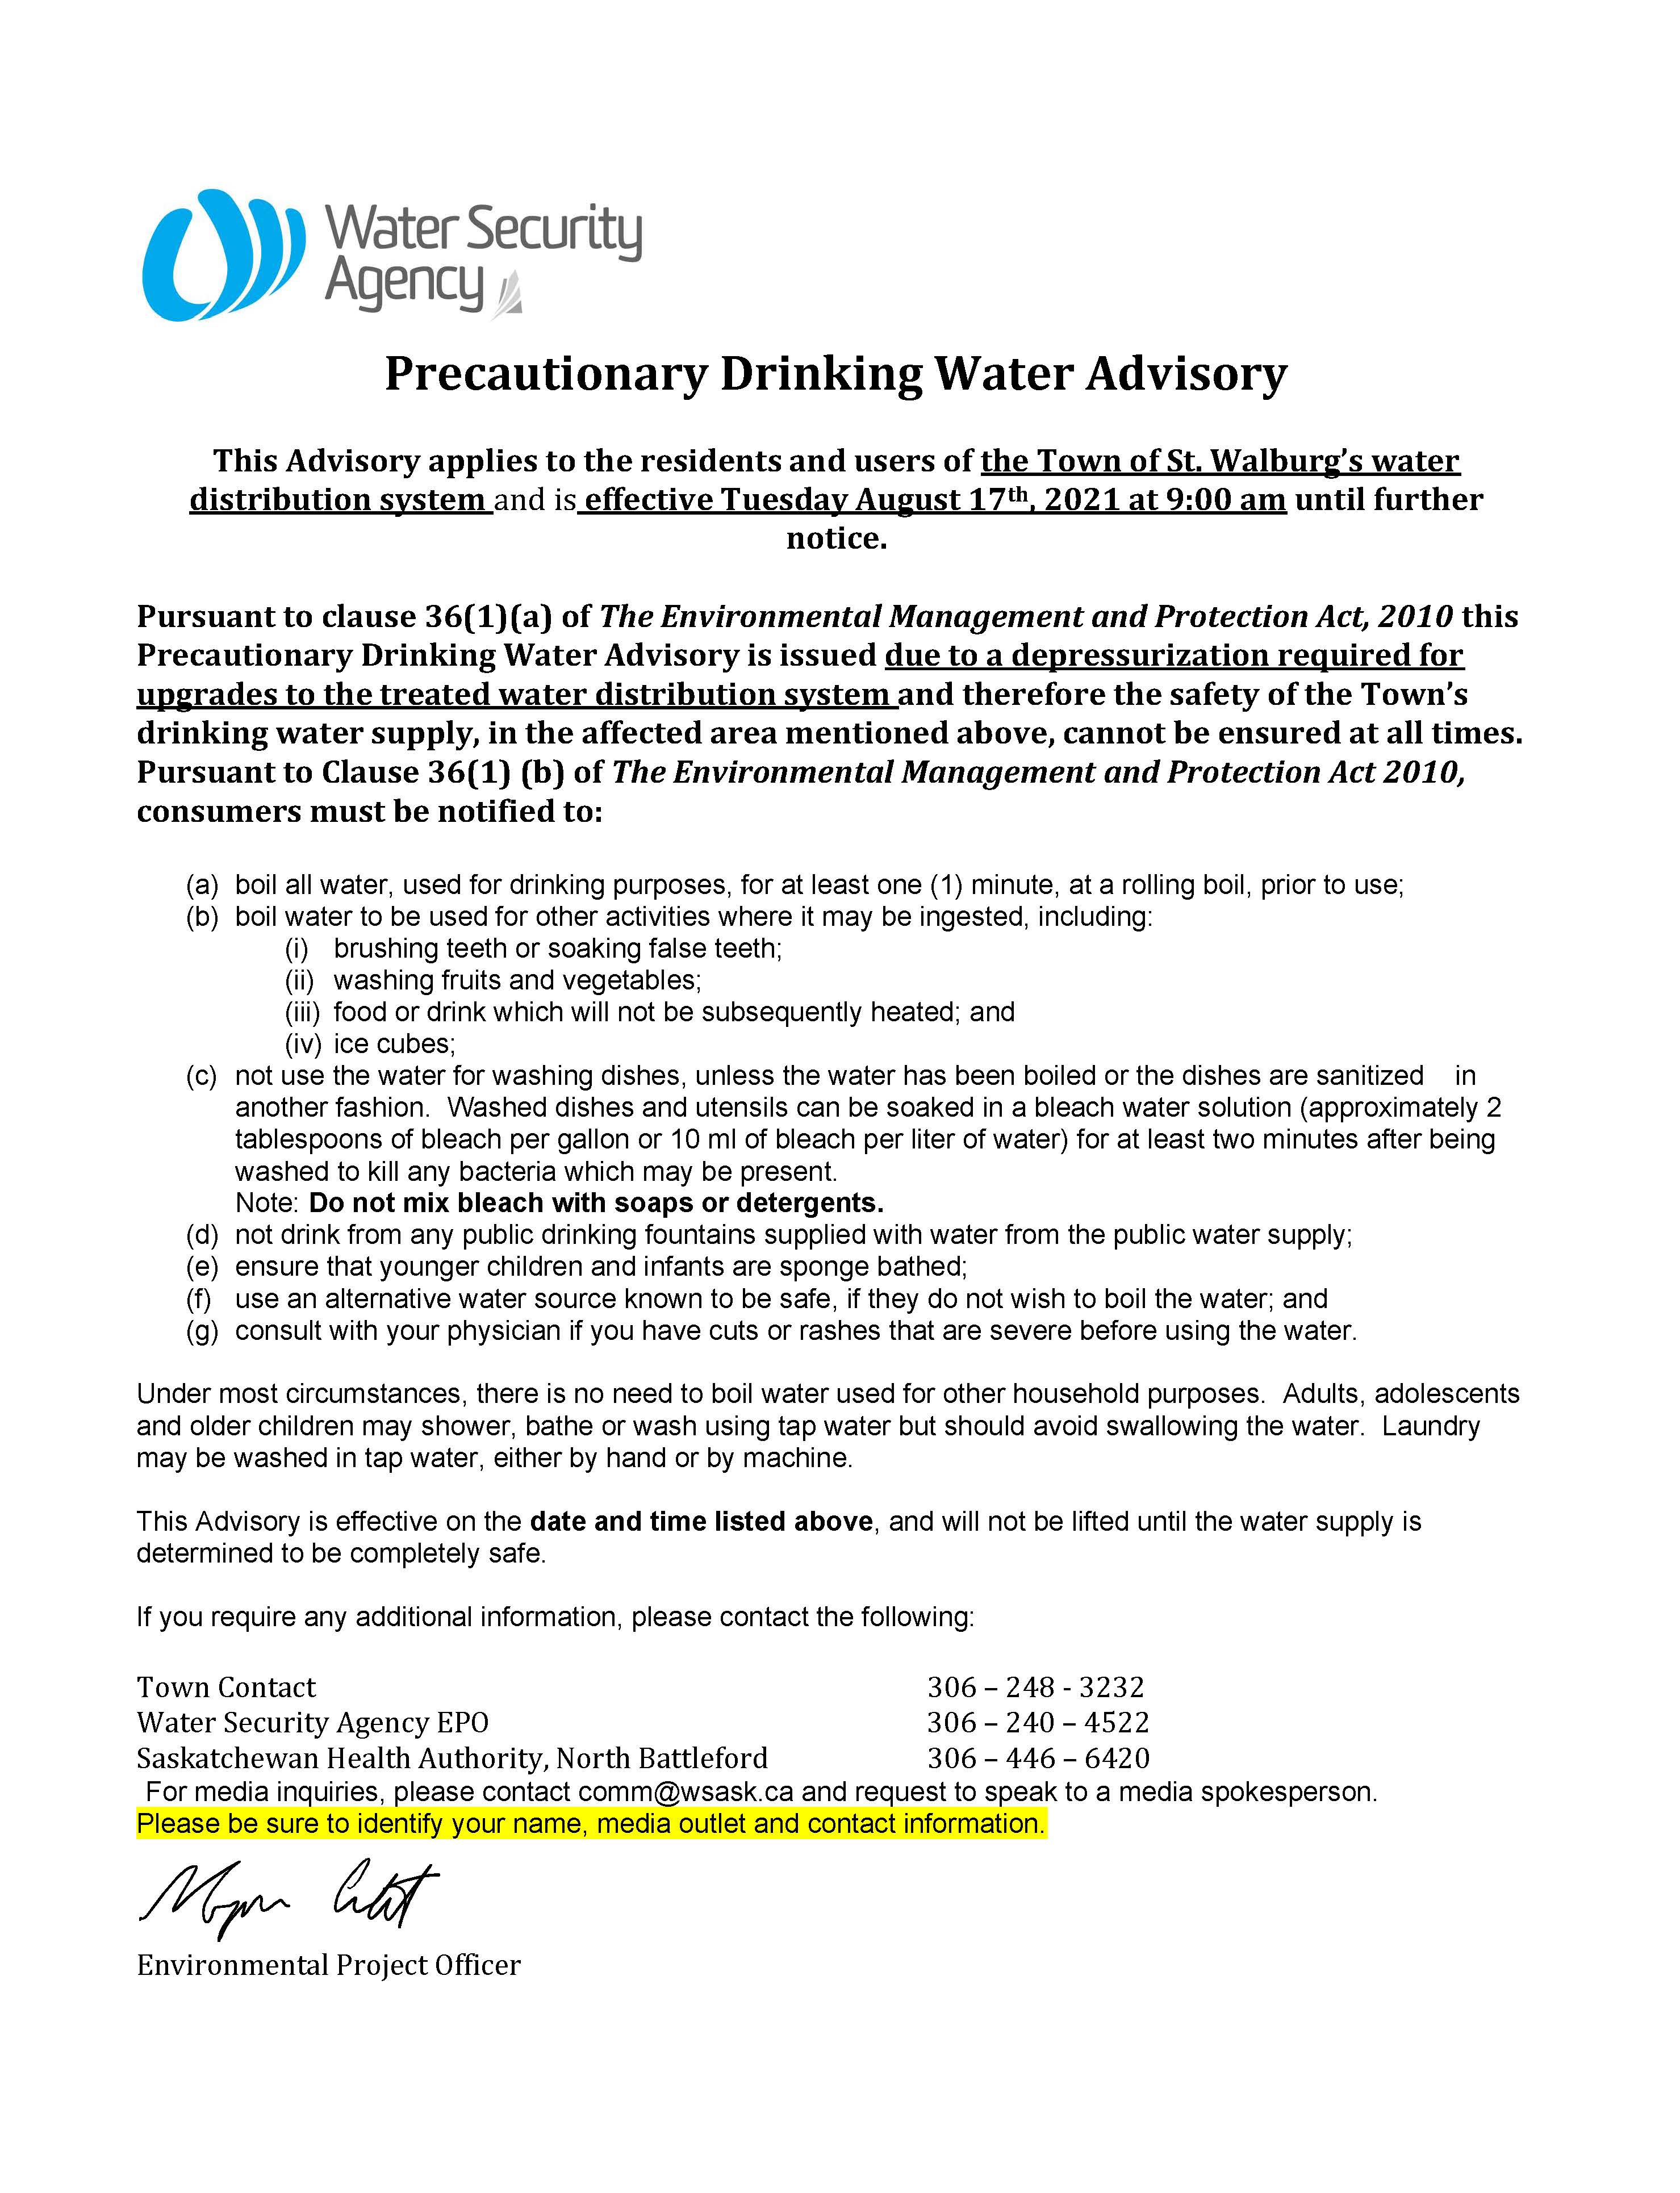 WTP Upgrades – No Water Supply